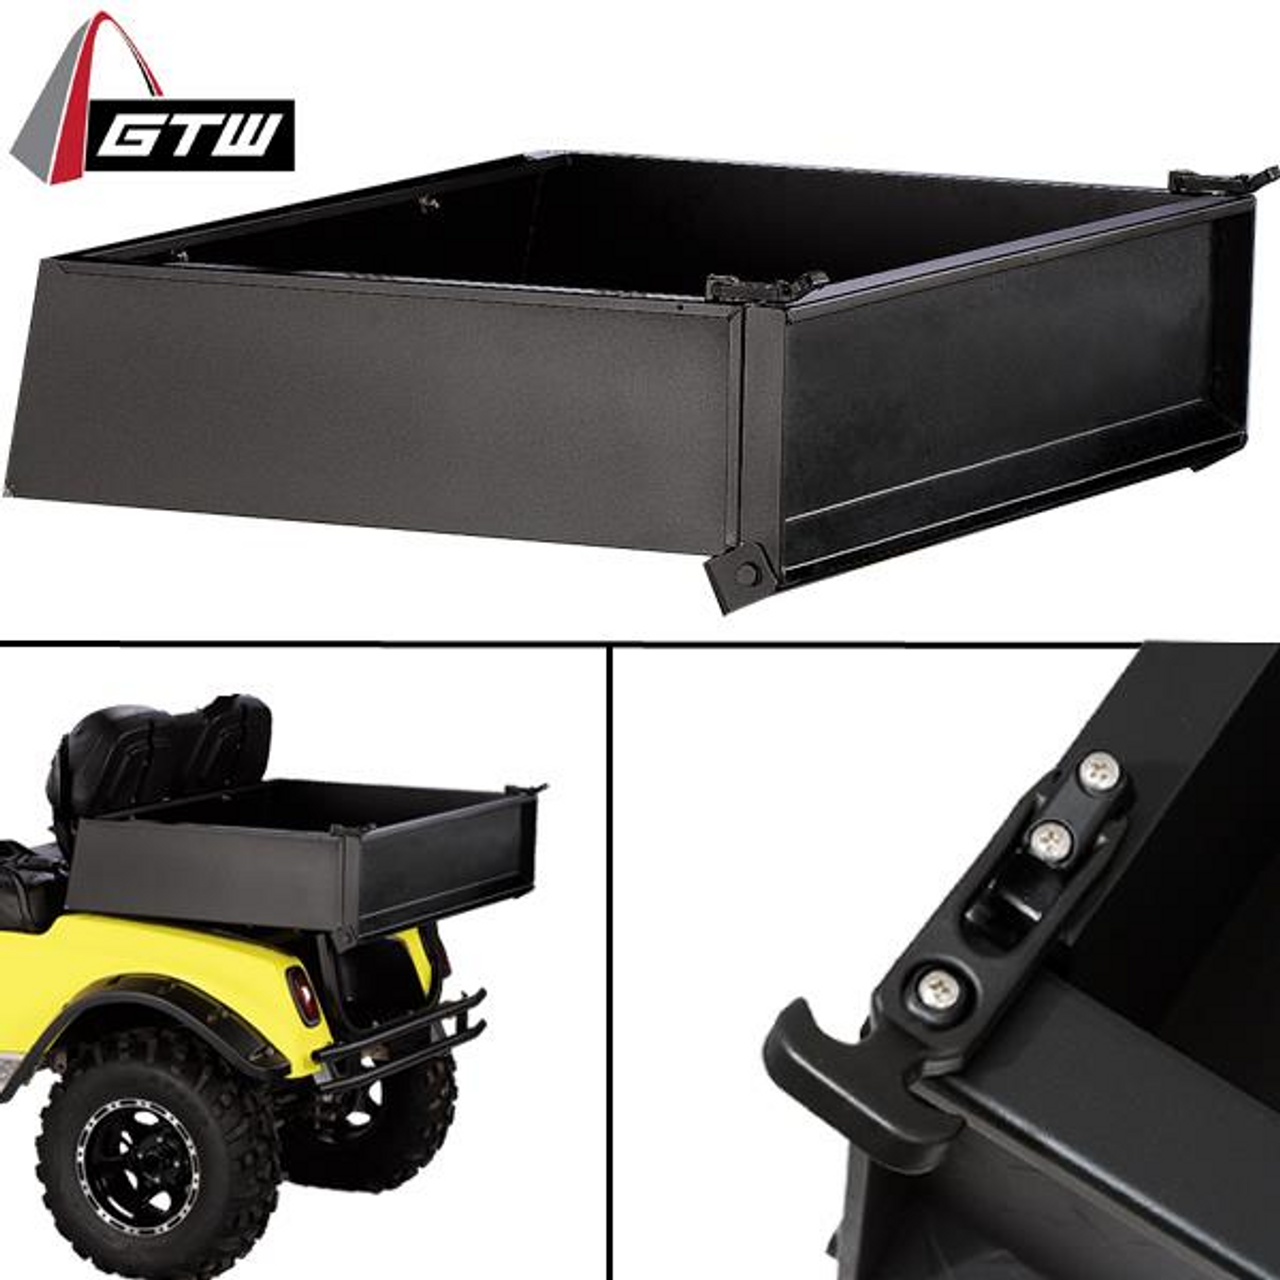 Black Steel Cargo Box GTW (Universal Golf Cart Fit), 04-016